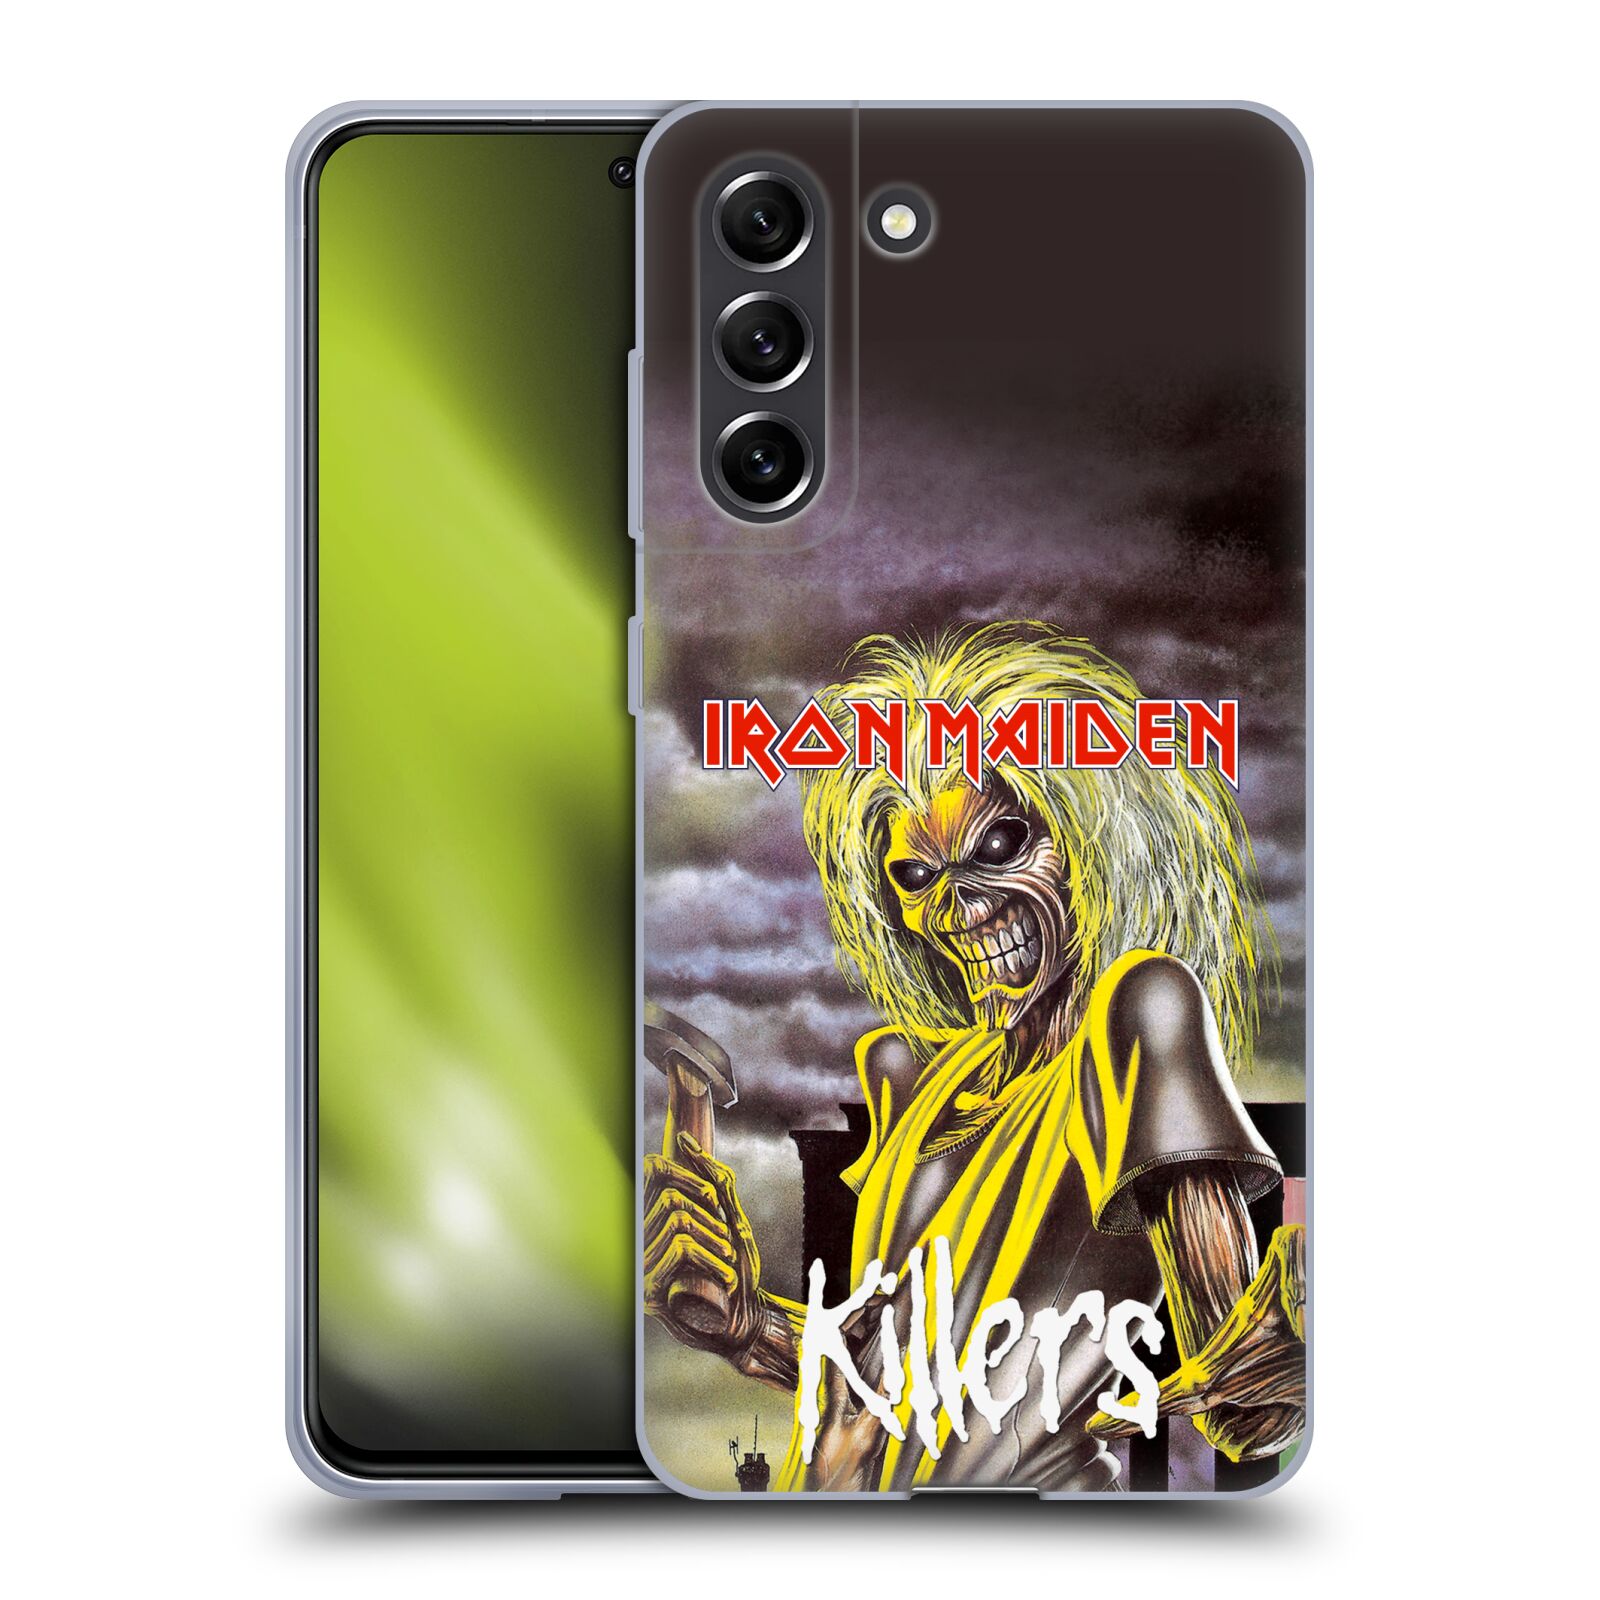 Silikonové pouzdro na mobil Samsung Galaxy S21 FE 5G - Head Case - Iron Maiden - Killers (Silikonový kryt, obal, pouzdro na mobilní telefon Samsung Galaxy S21 FE 5G s motivem Iron Maiden - Killers)